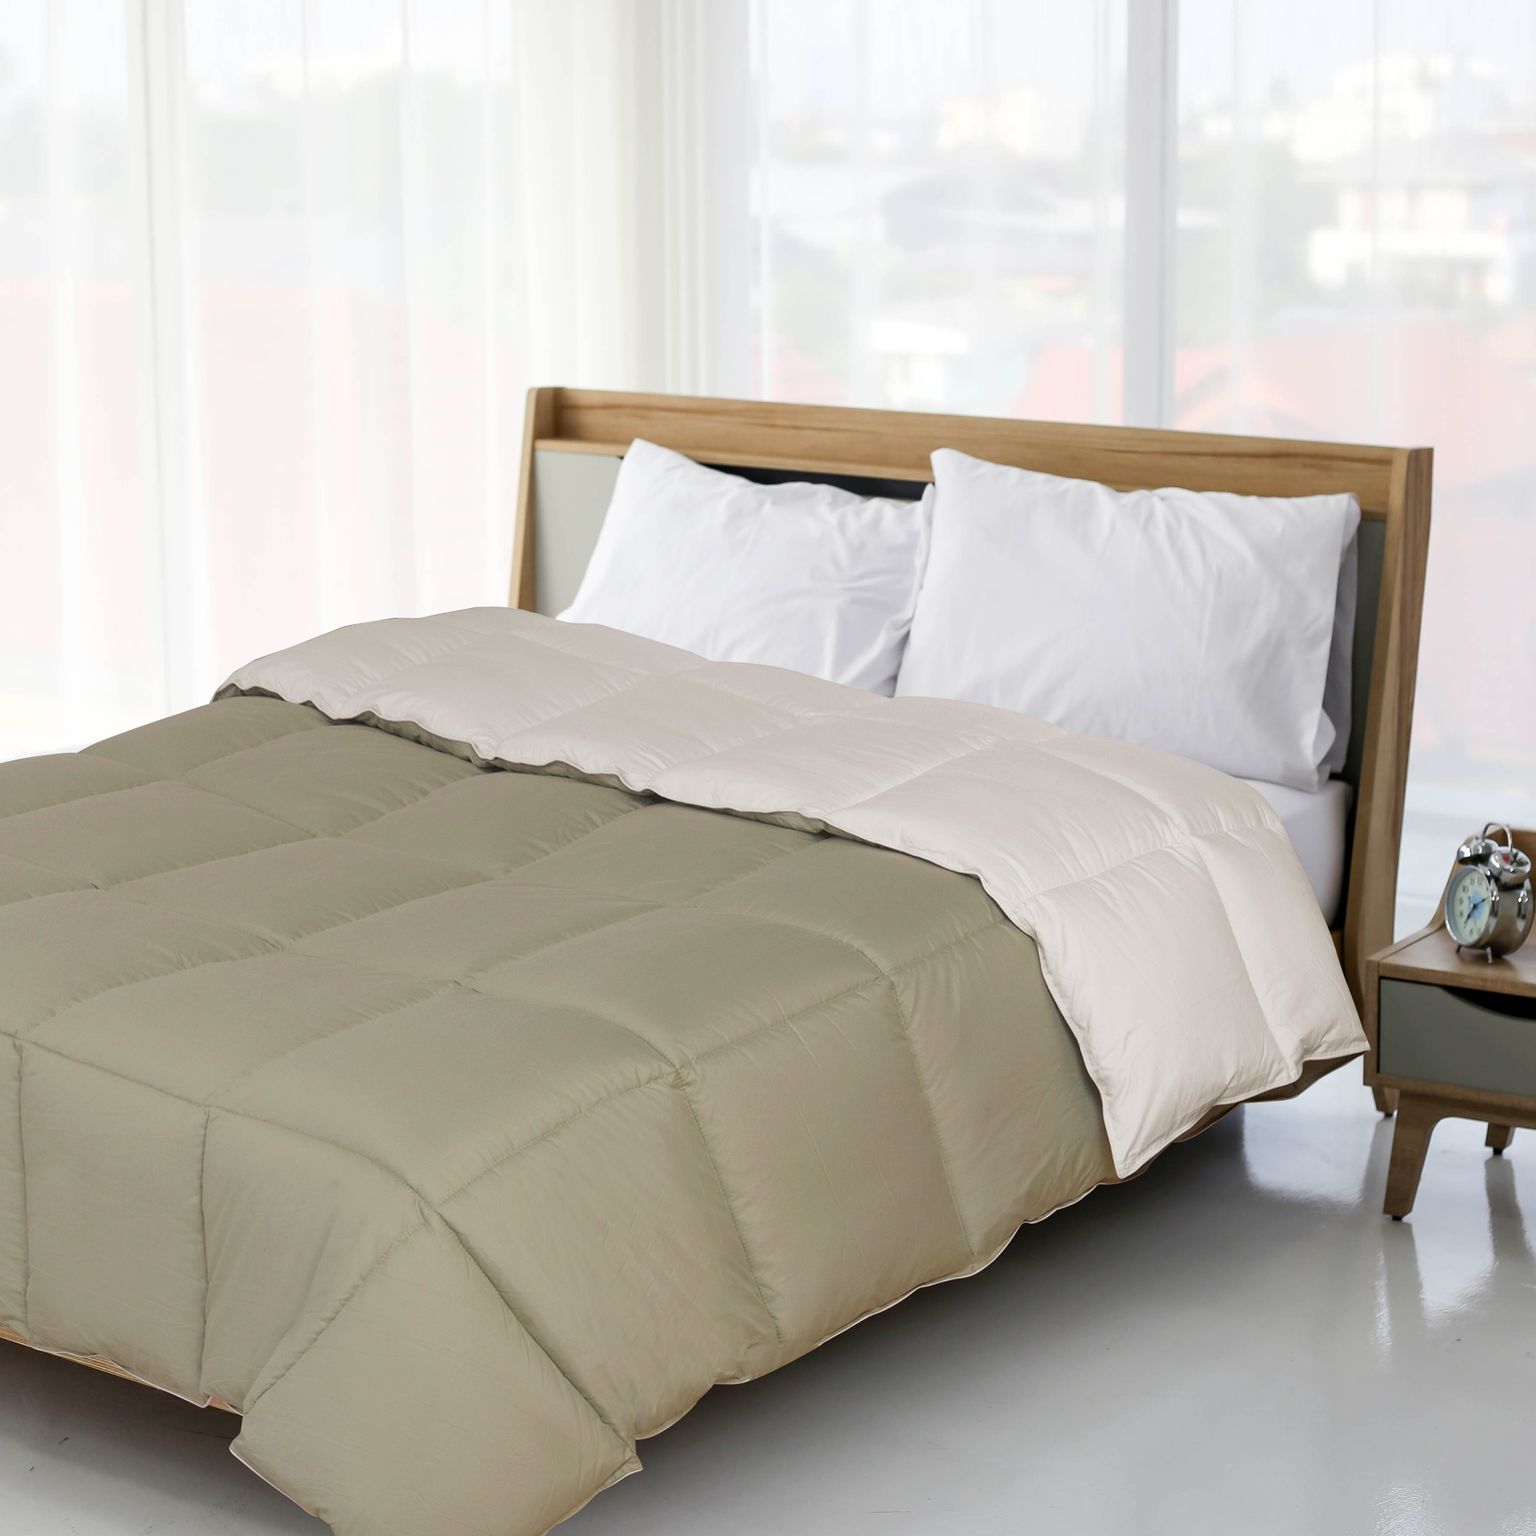 Superior Down Alternative Reversible Comforter, King, Ivory/ Sage - image 2 of 4